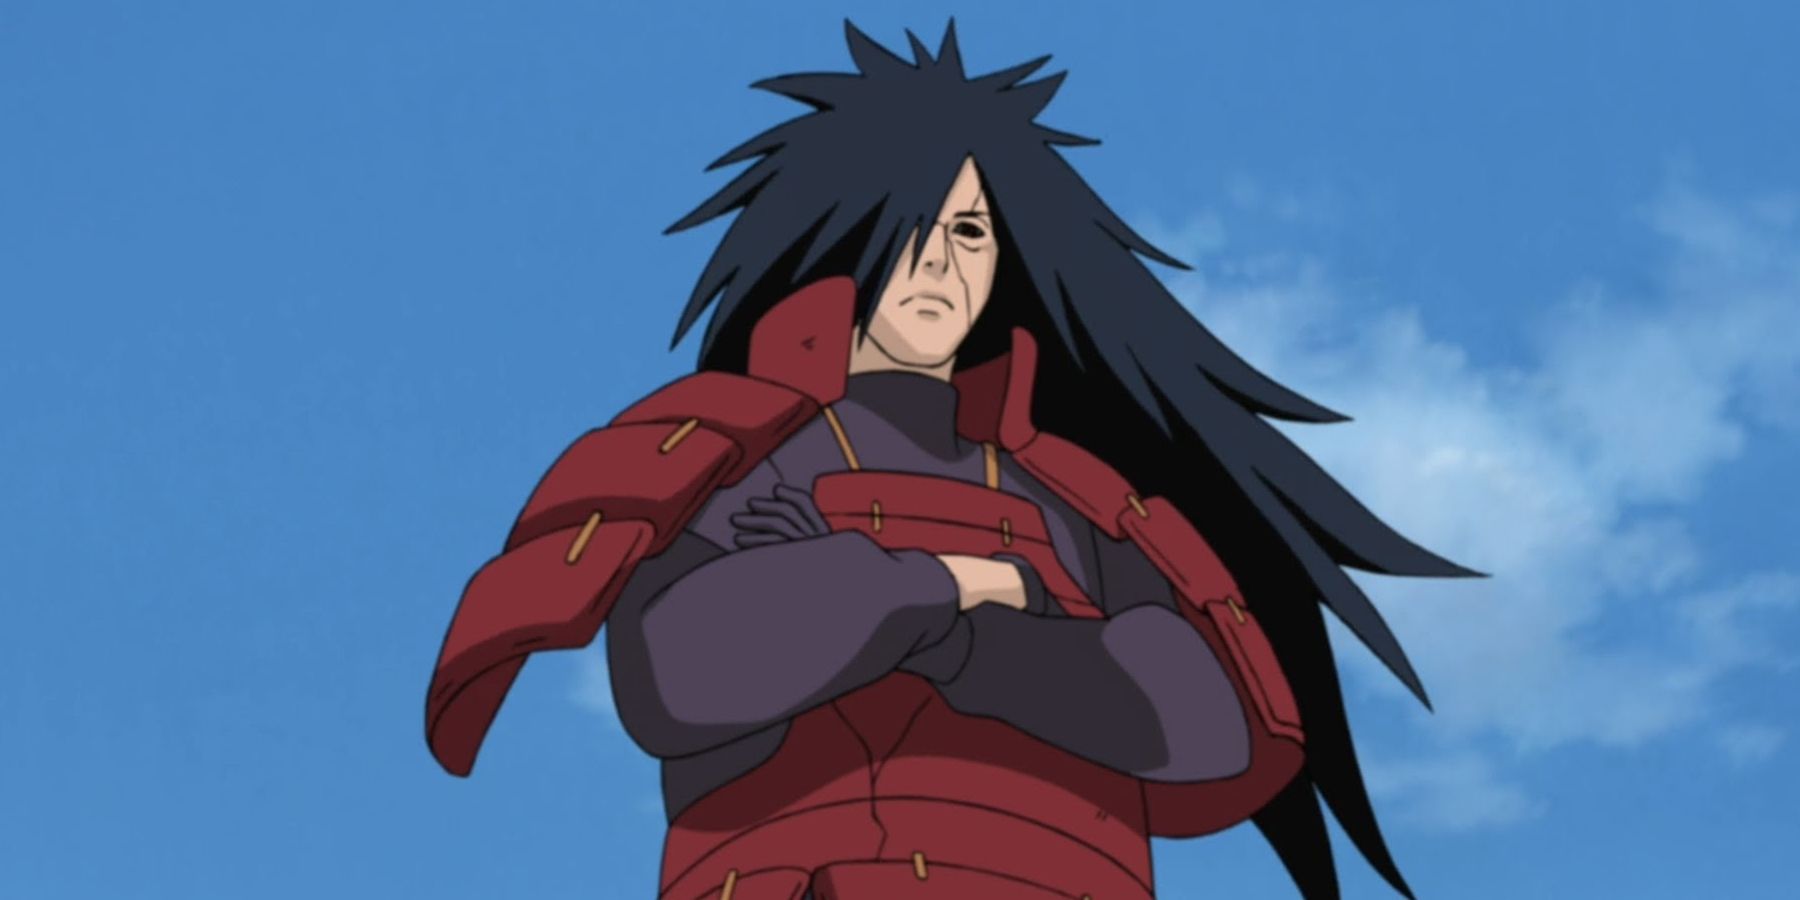 Naruto Madara Uchiha reanimated during the Fourth Great Ninja War